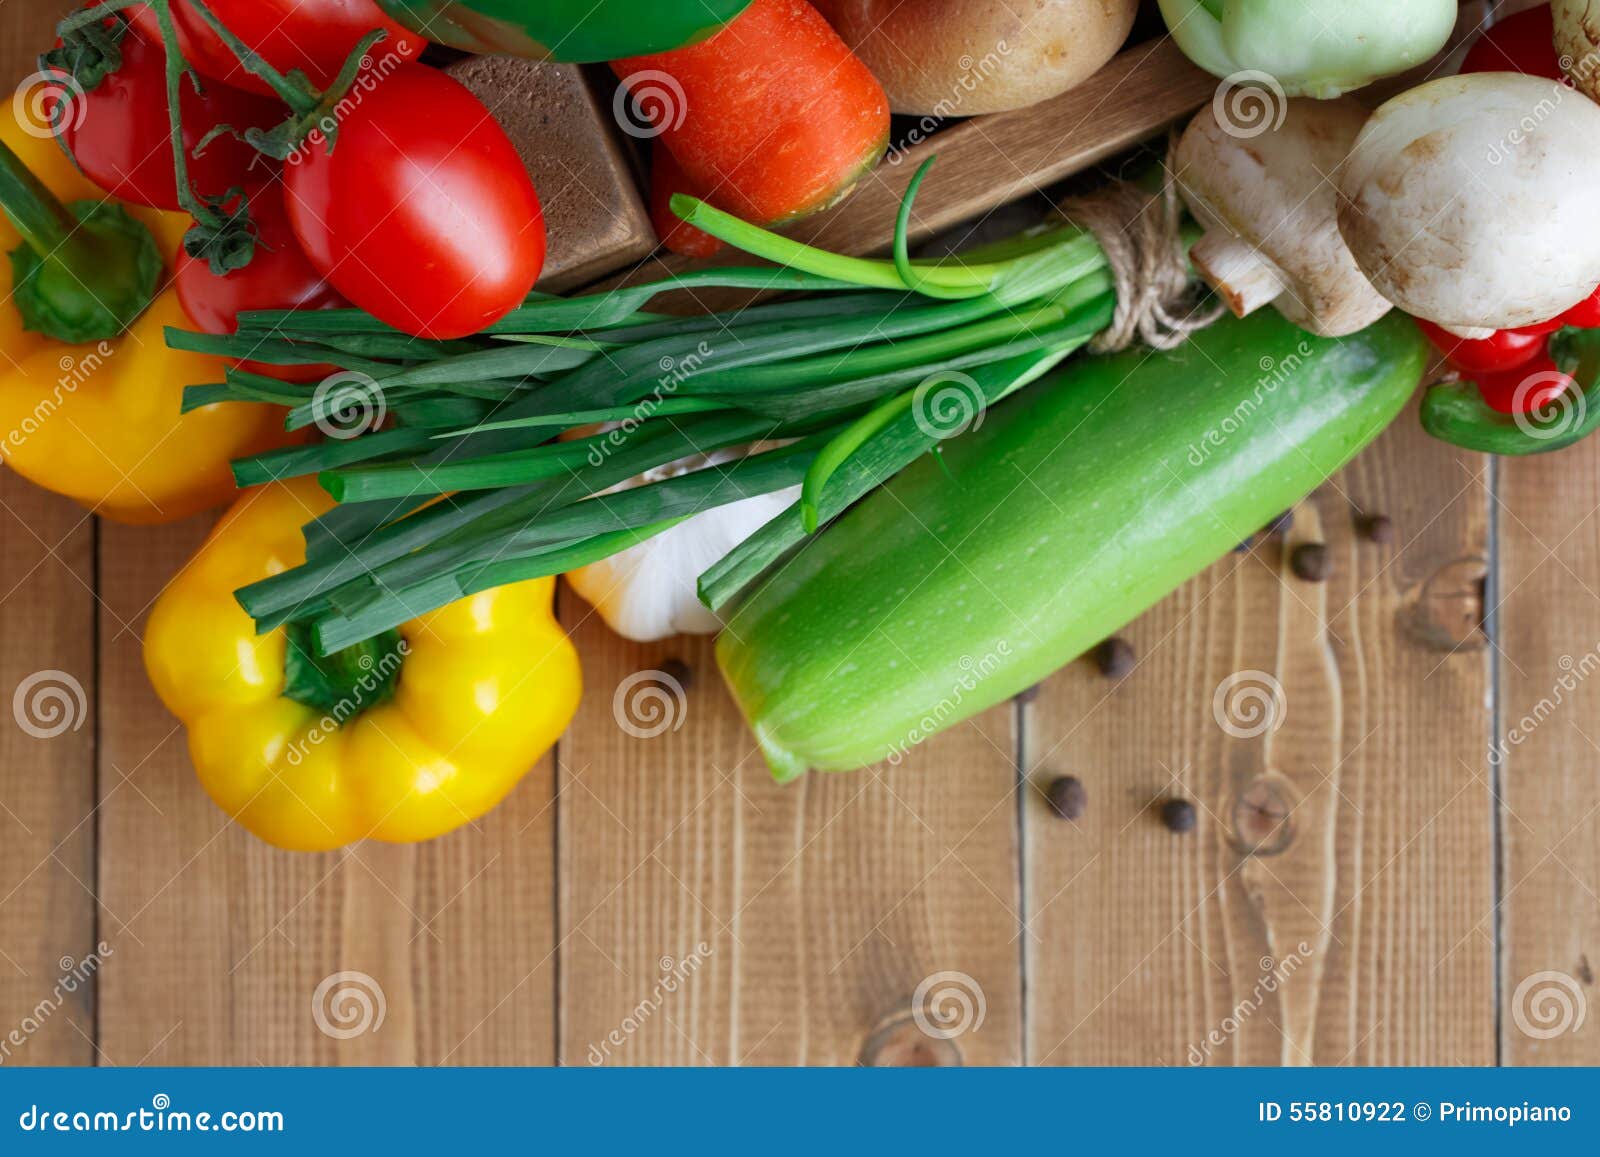 Big set of vegetables stock photo. Image of farmer, natural - 55810922